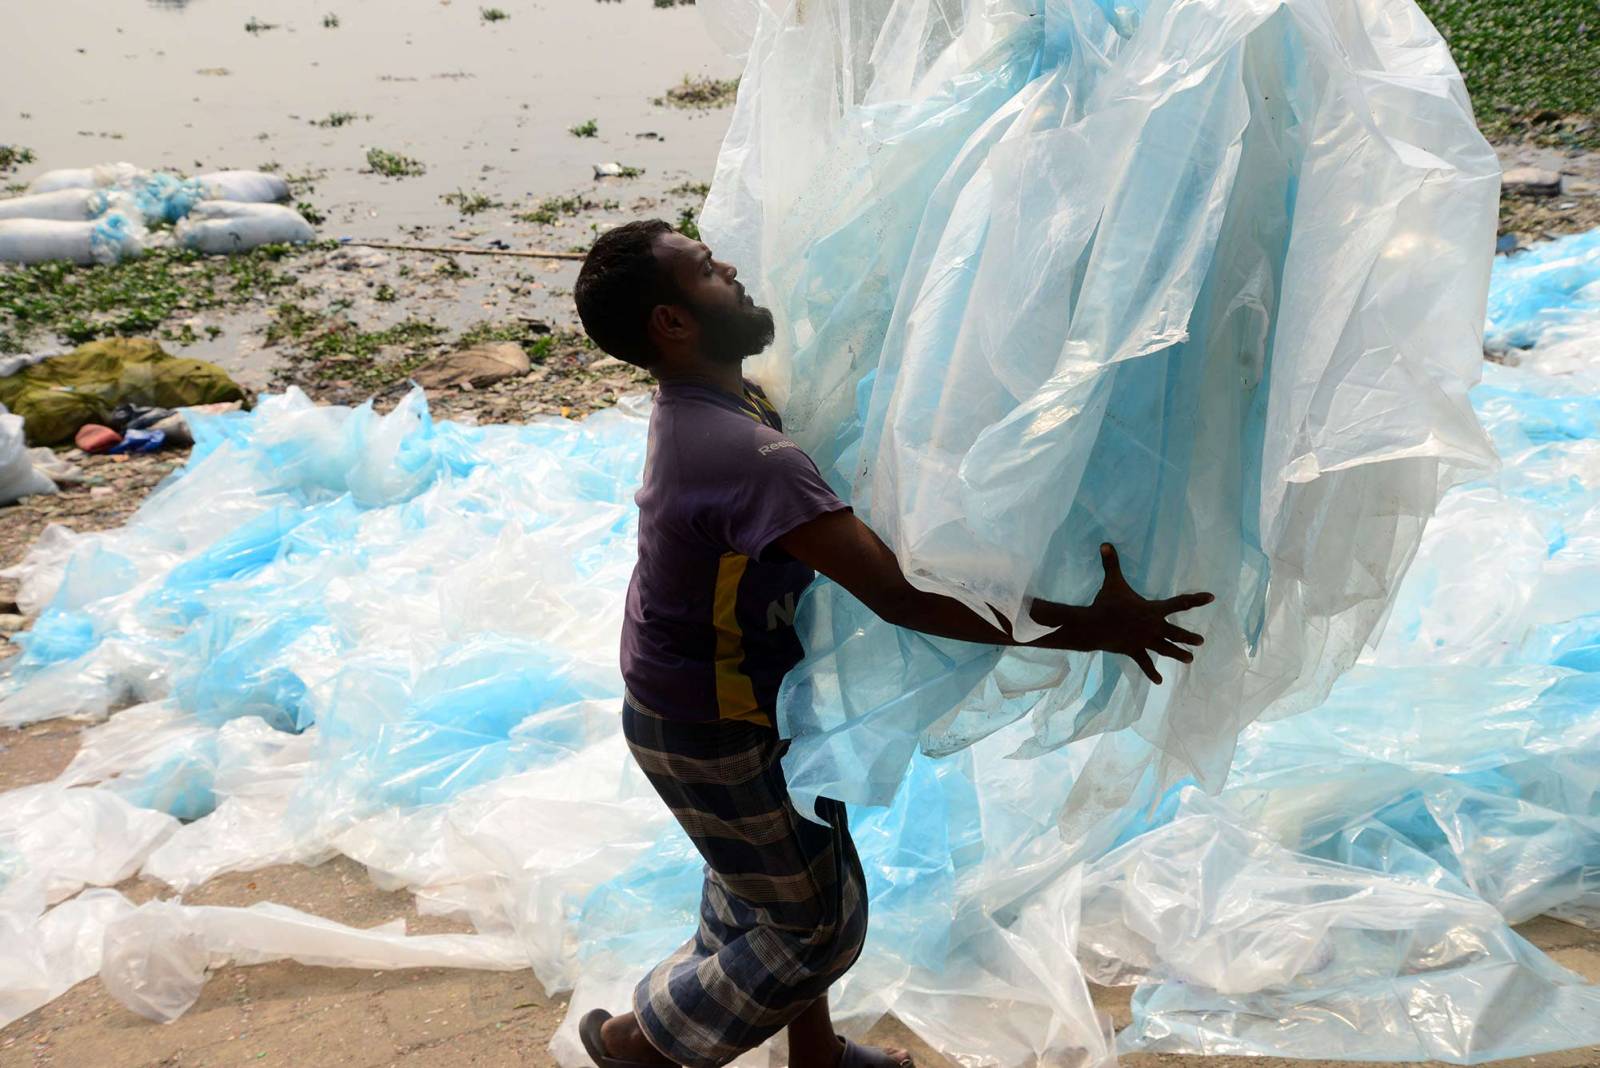 Zbieranie plastiku, Bangladesz (Fot. Mamunur Rashid/NurPhoto via Getty Images)